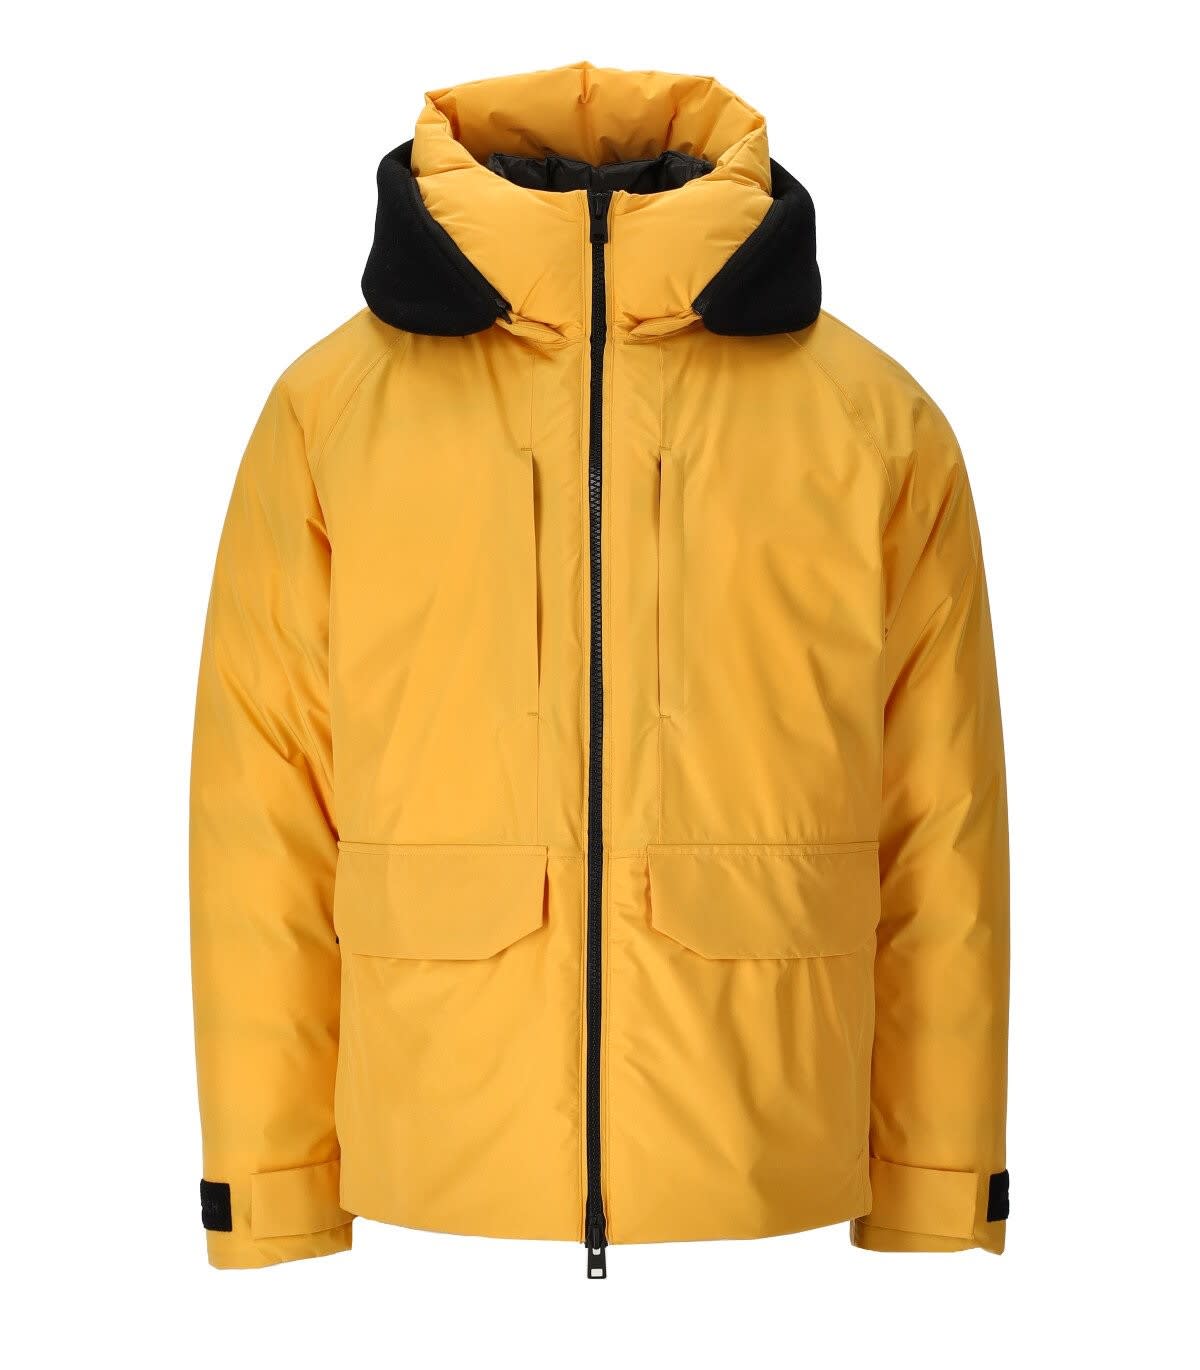 Woolrich Pertex Mountain Yellow Jacket